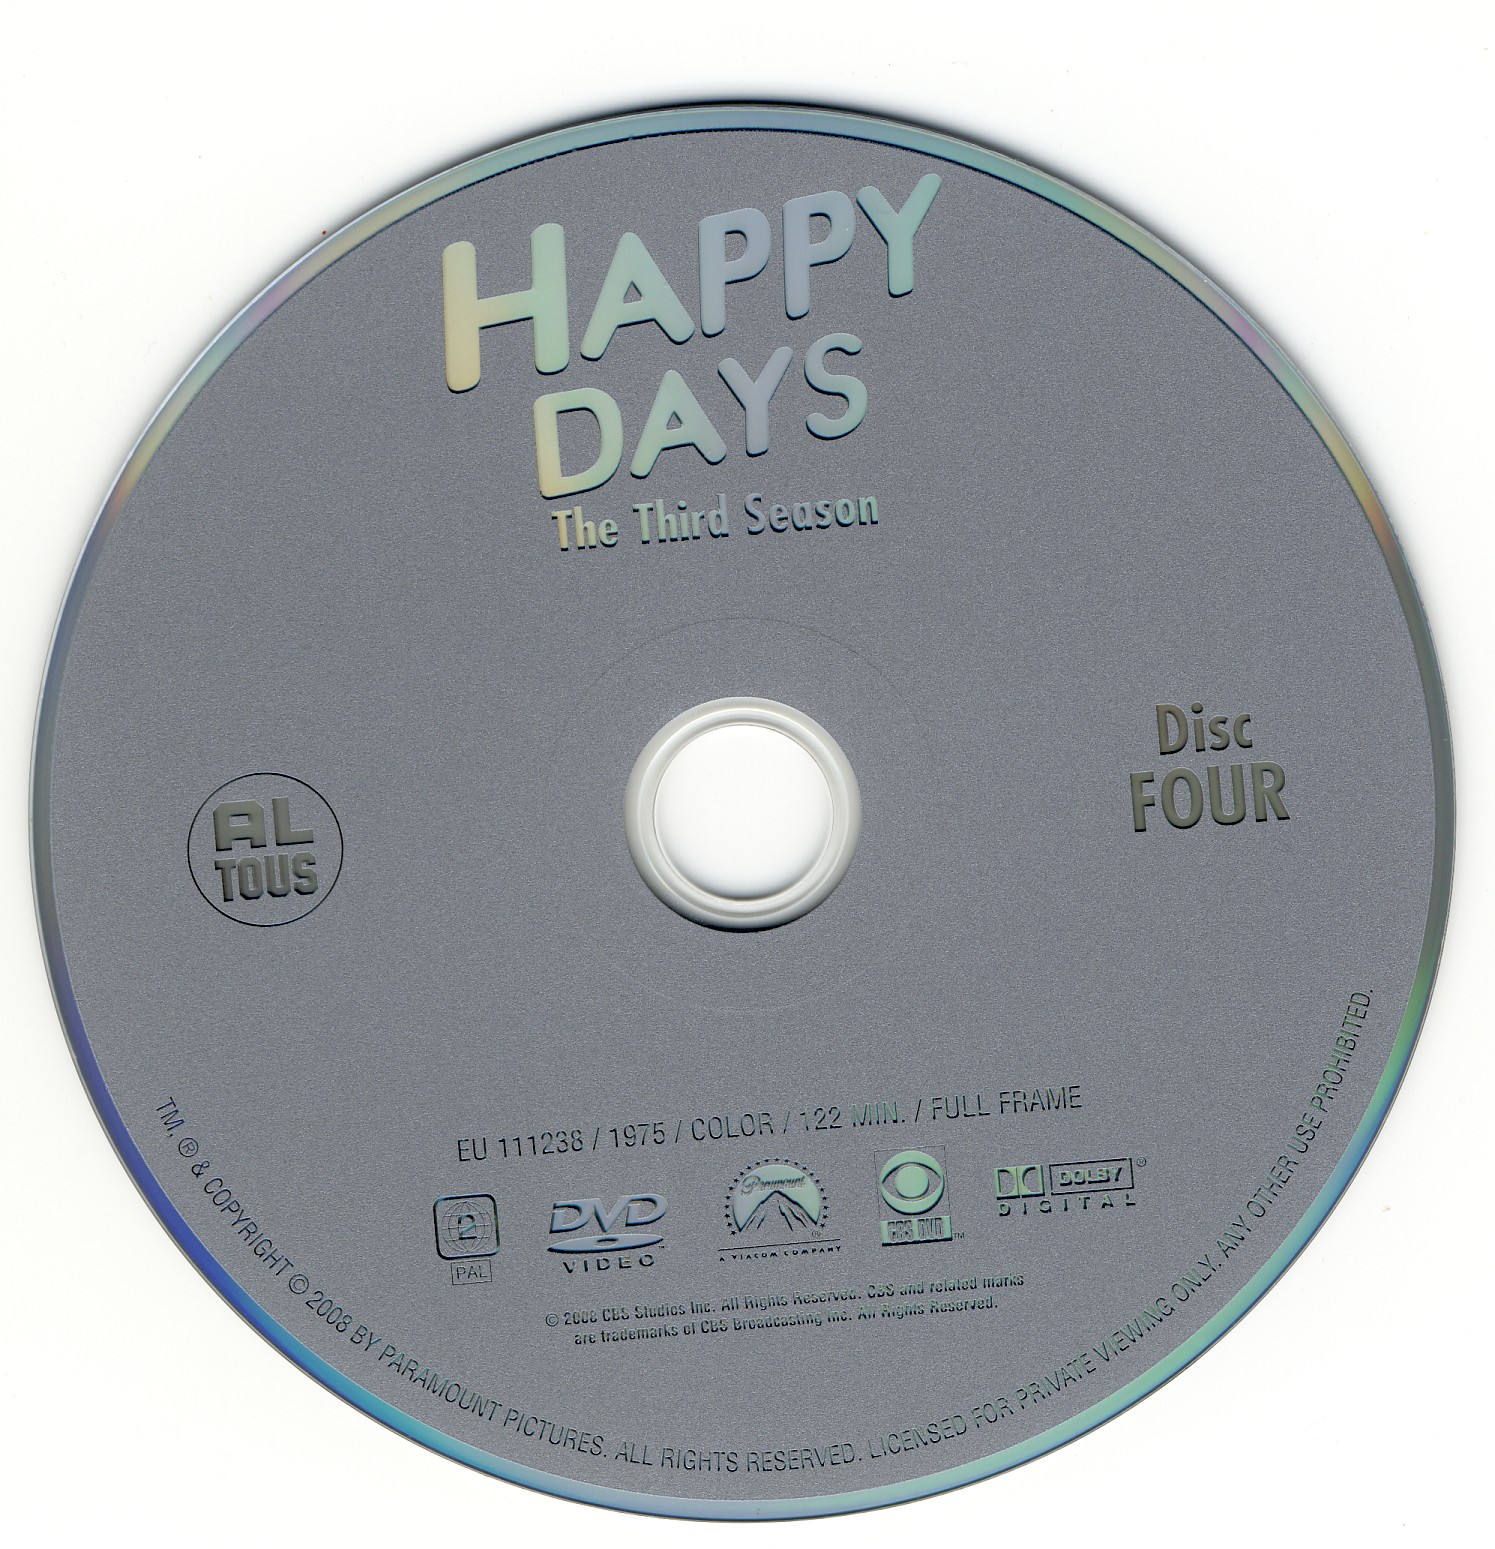 Happy days Saison 03 DISC 4